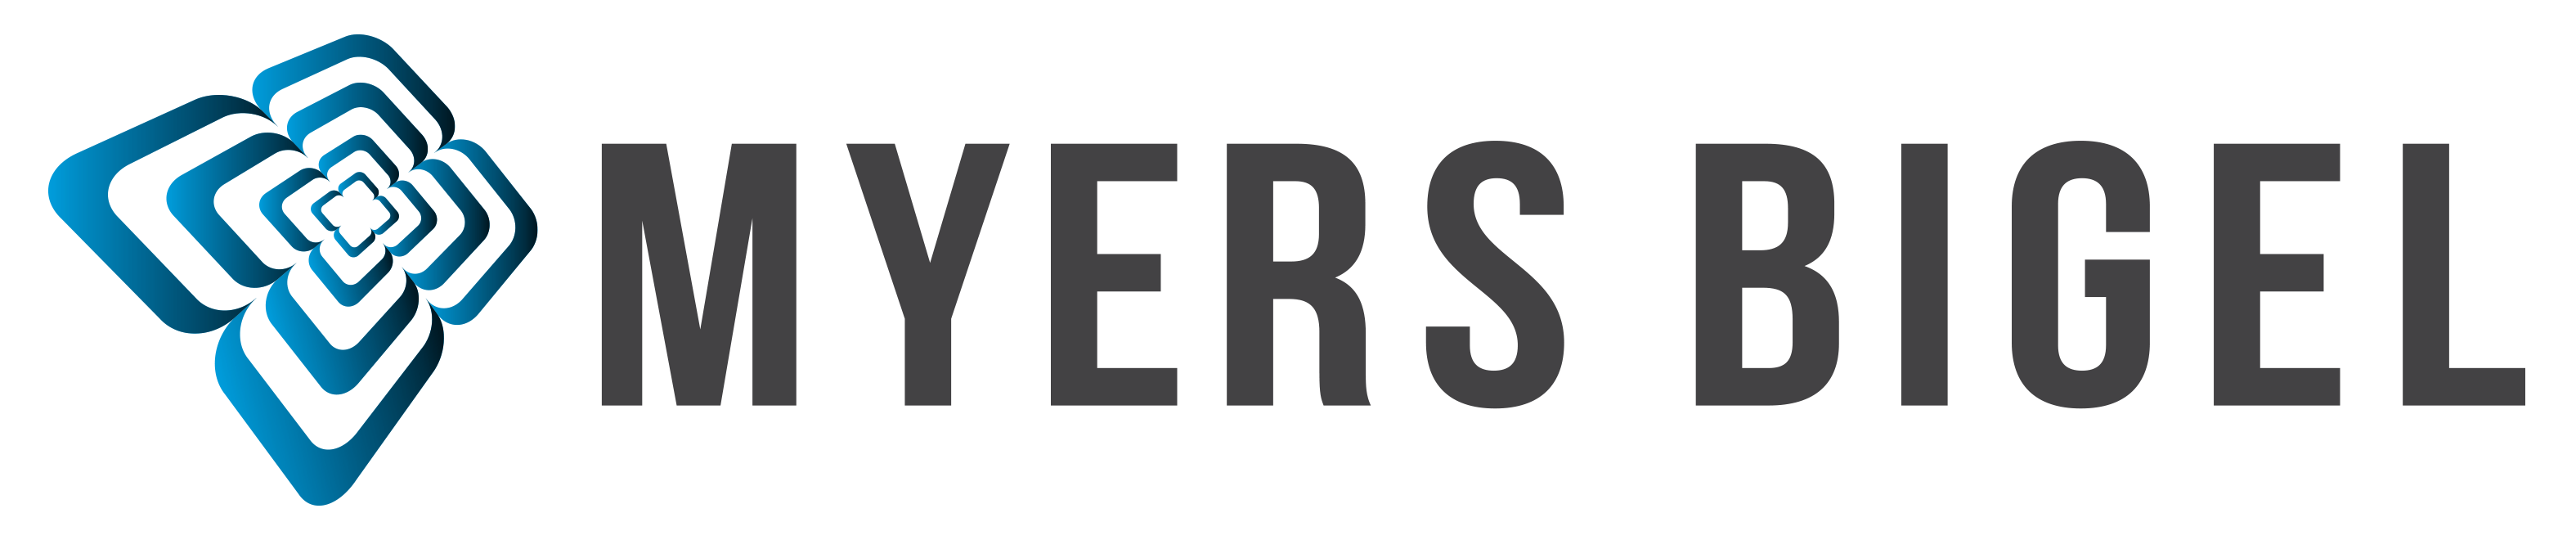 Myers Bigel Logo